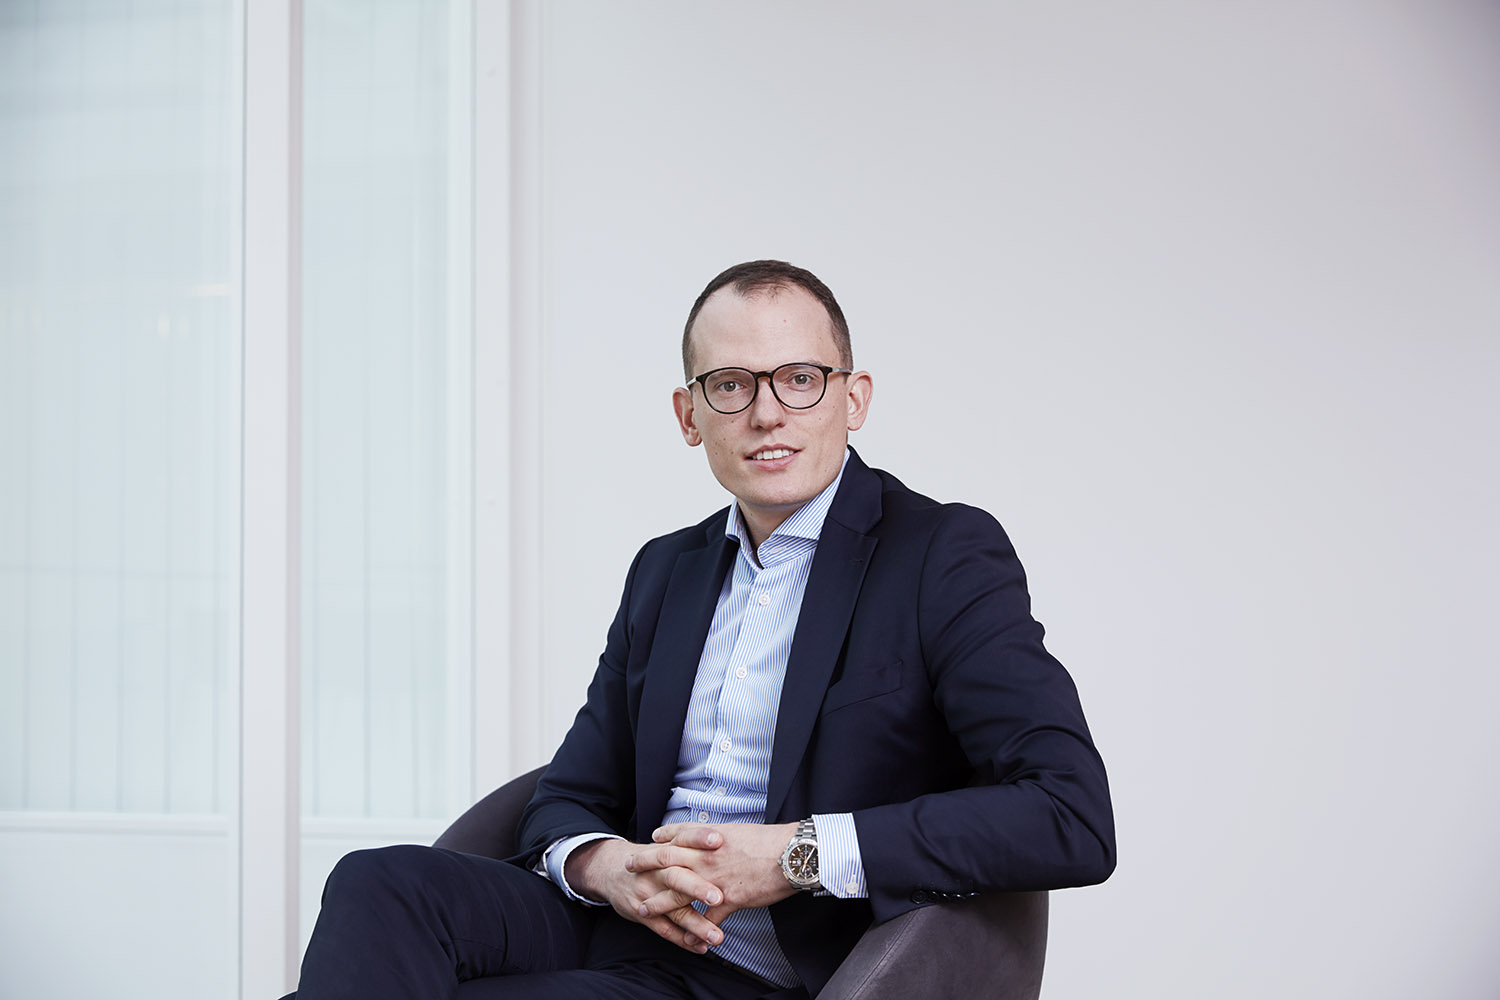 Sindre Talleraas Holen, Director of Mergers & Acquisitions at Visma